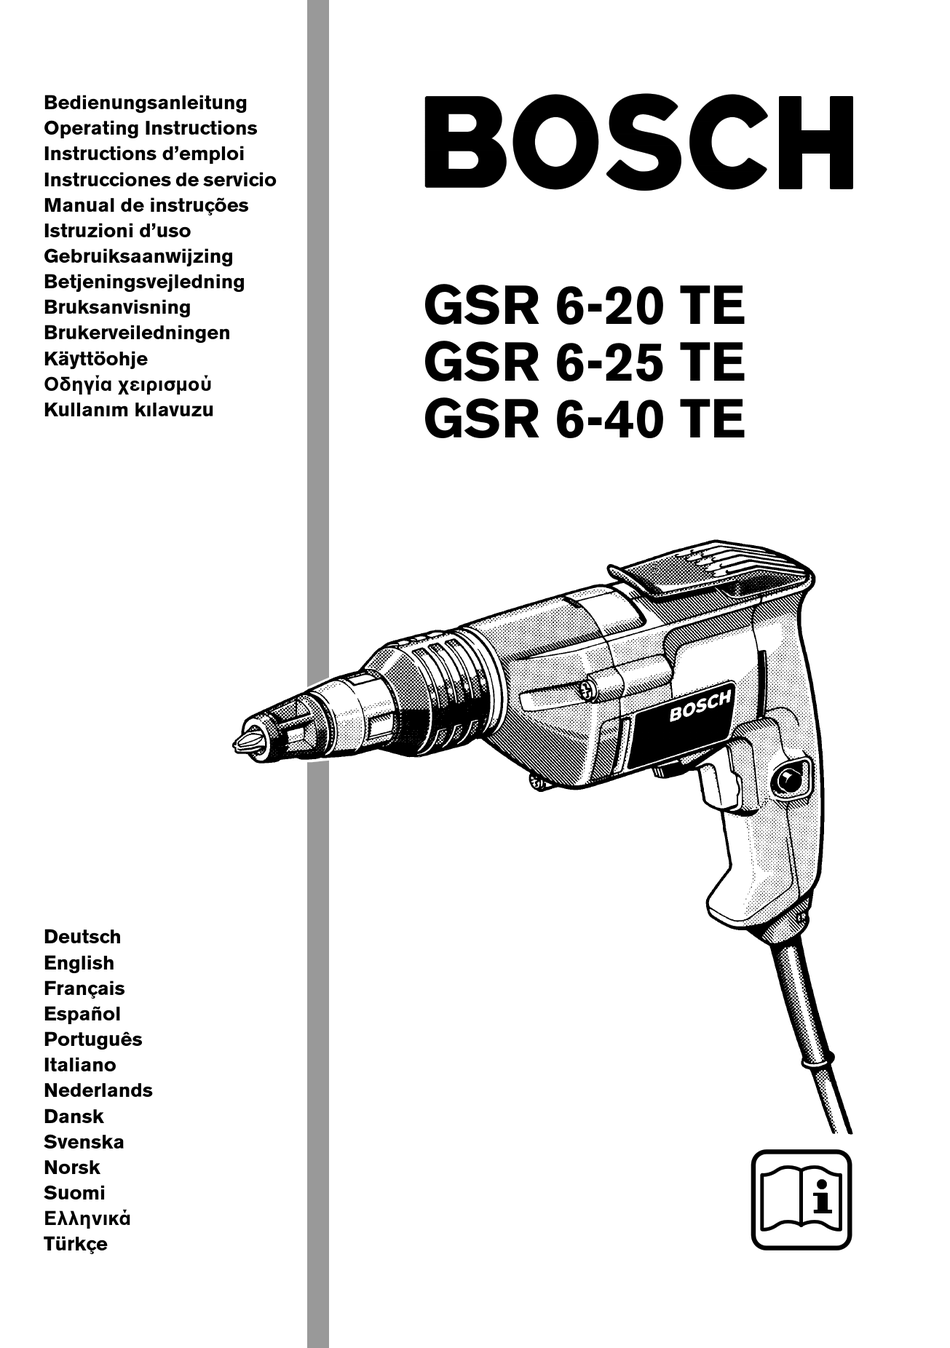 gsr 6-45 8-16 Carbon Brushes BOSCH GSR 6-20 TE gsr 6-25 te gsr 6-40 te